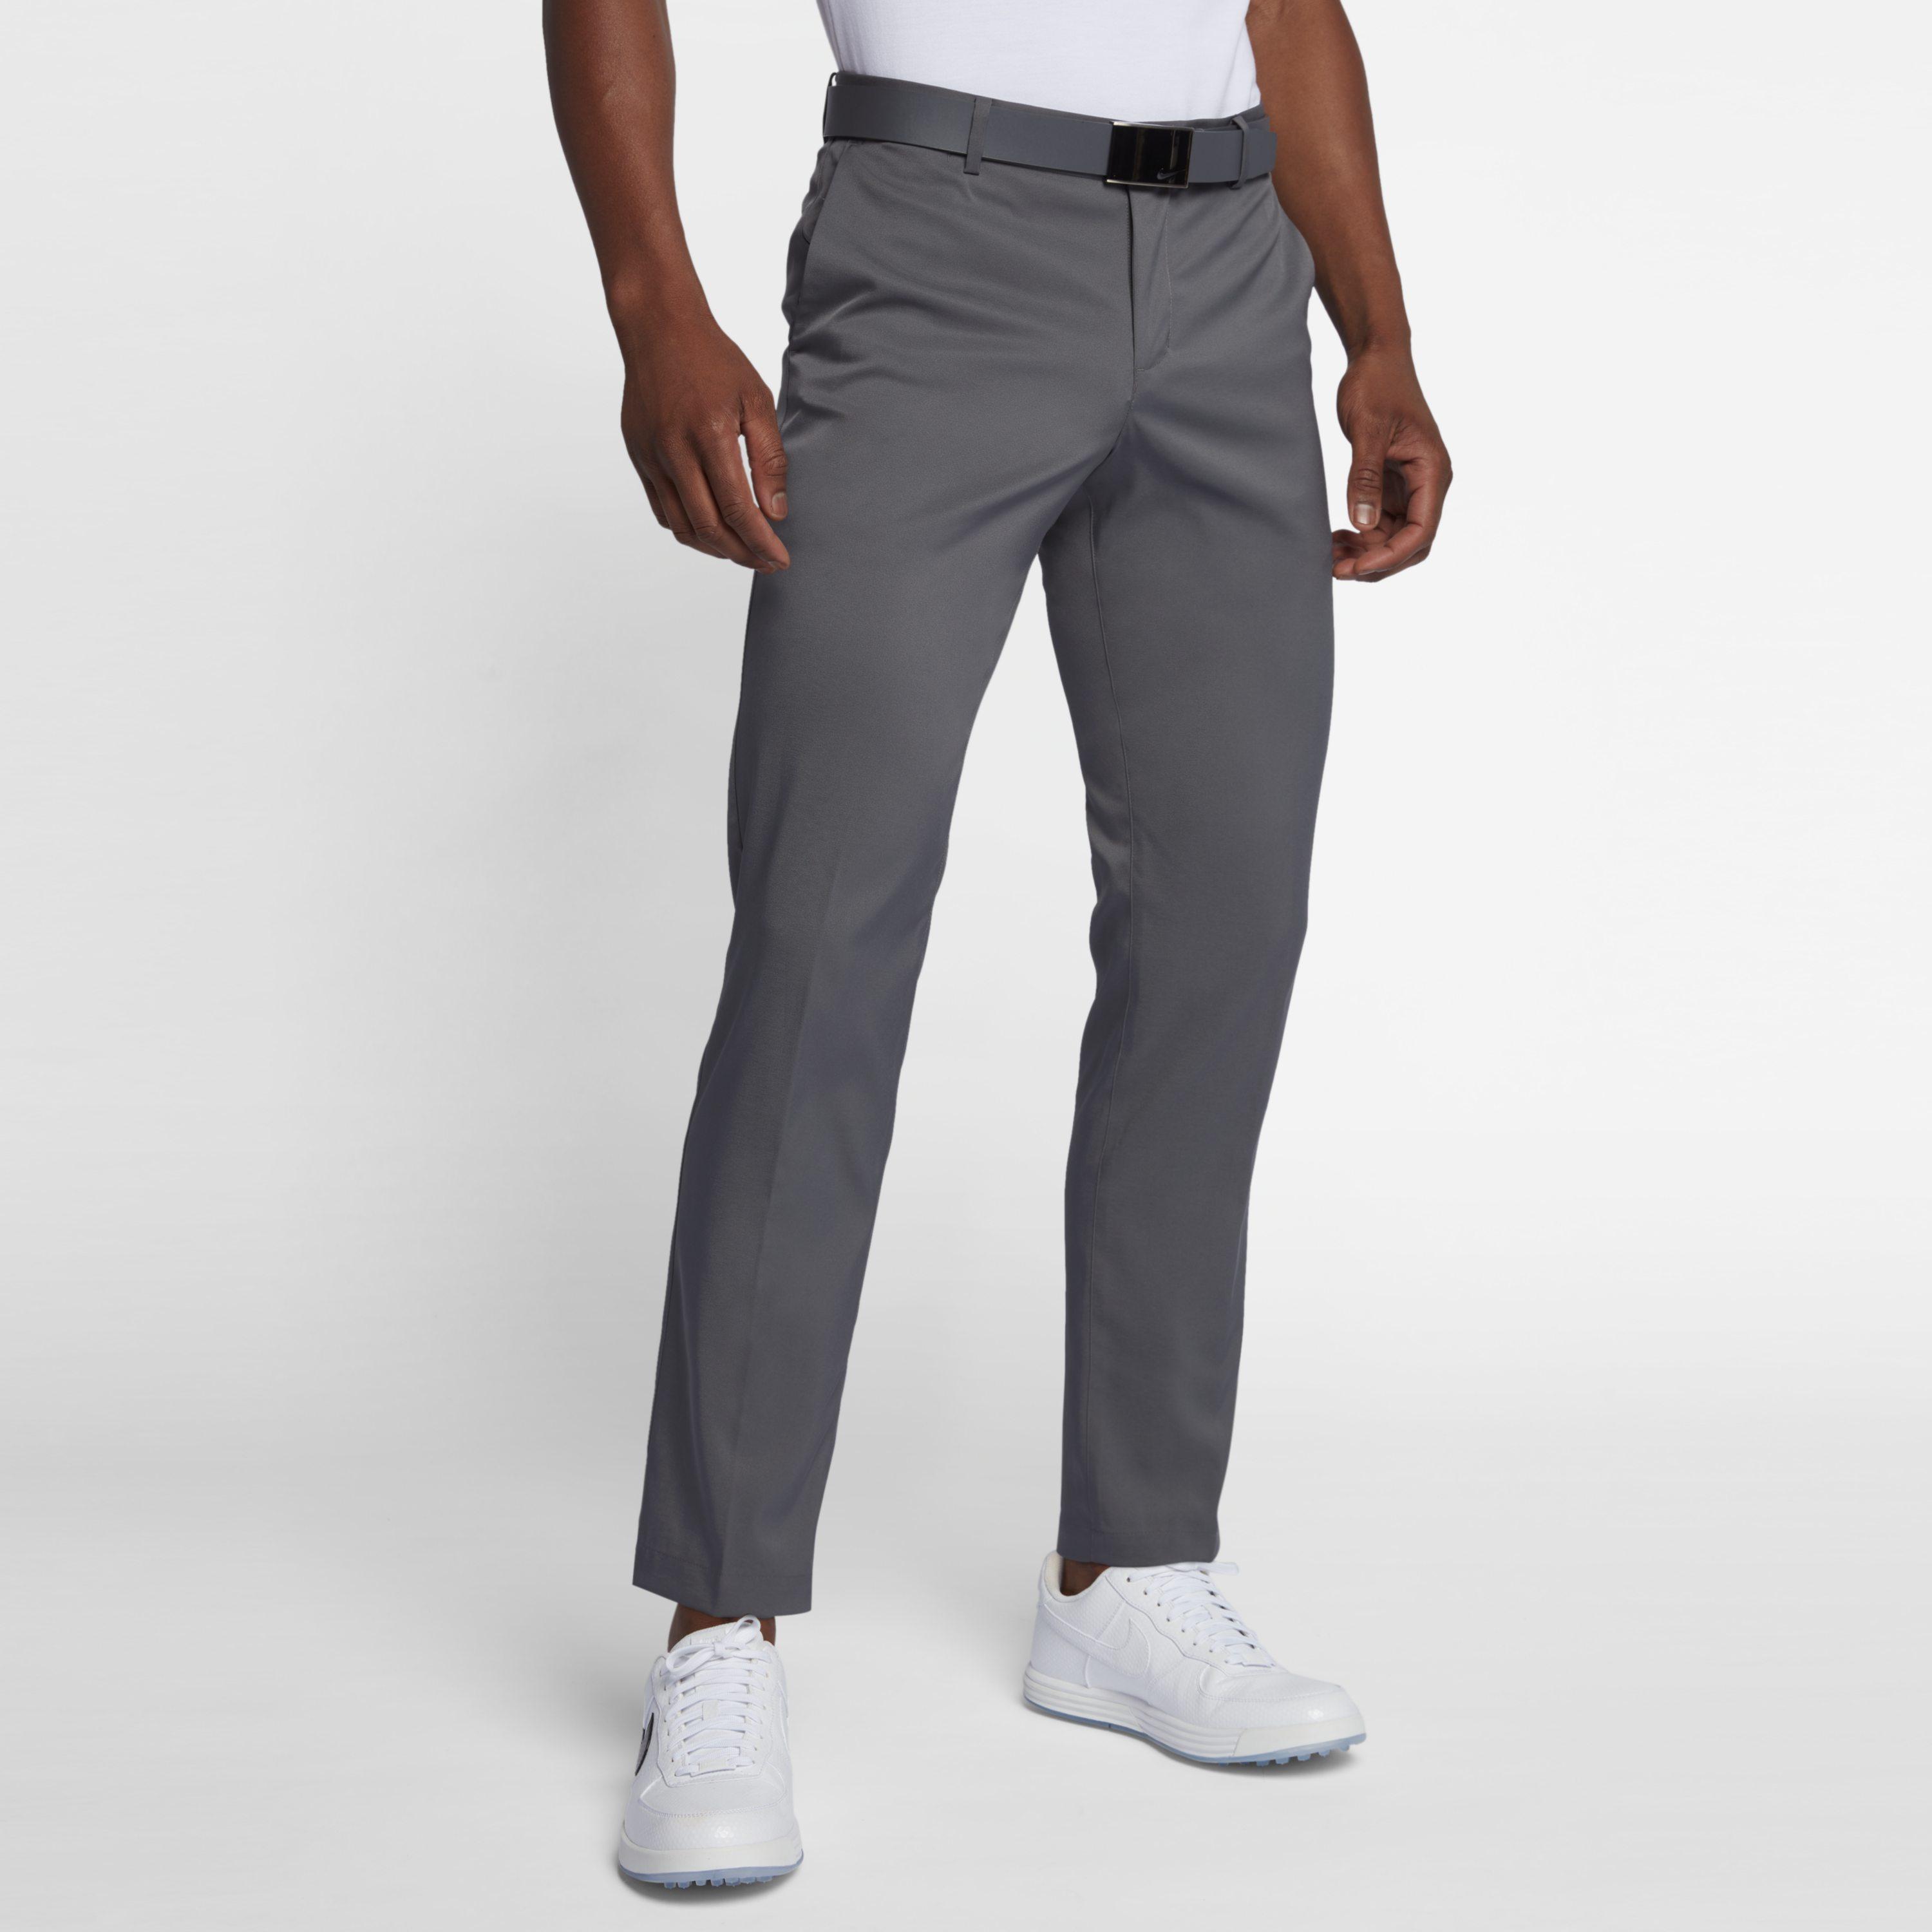 Nike Flex Golf Trousers in Grey (Grey) for Men - Lyst